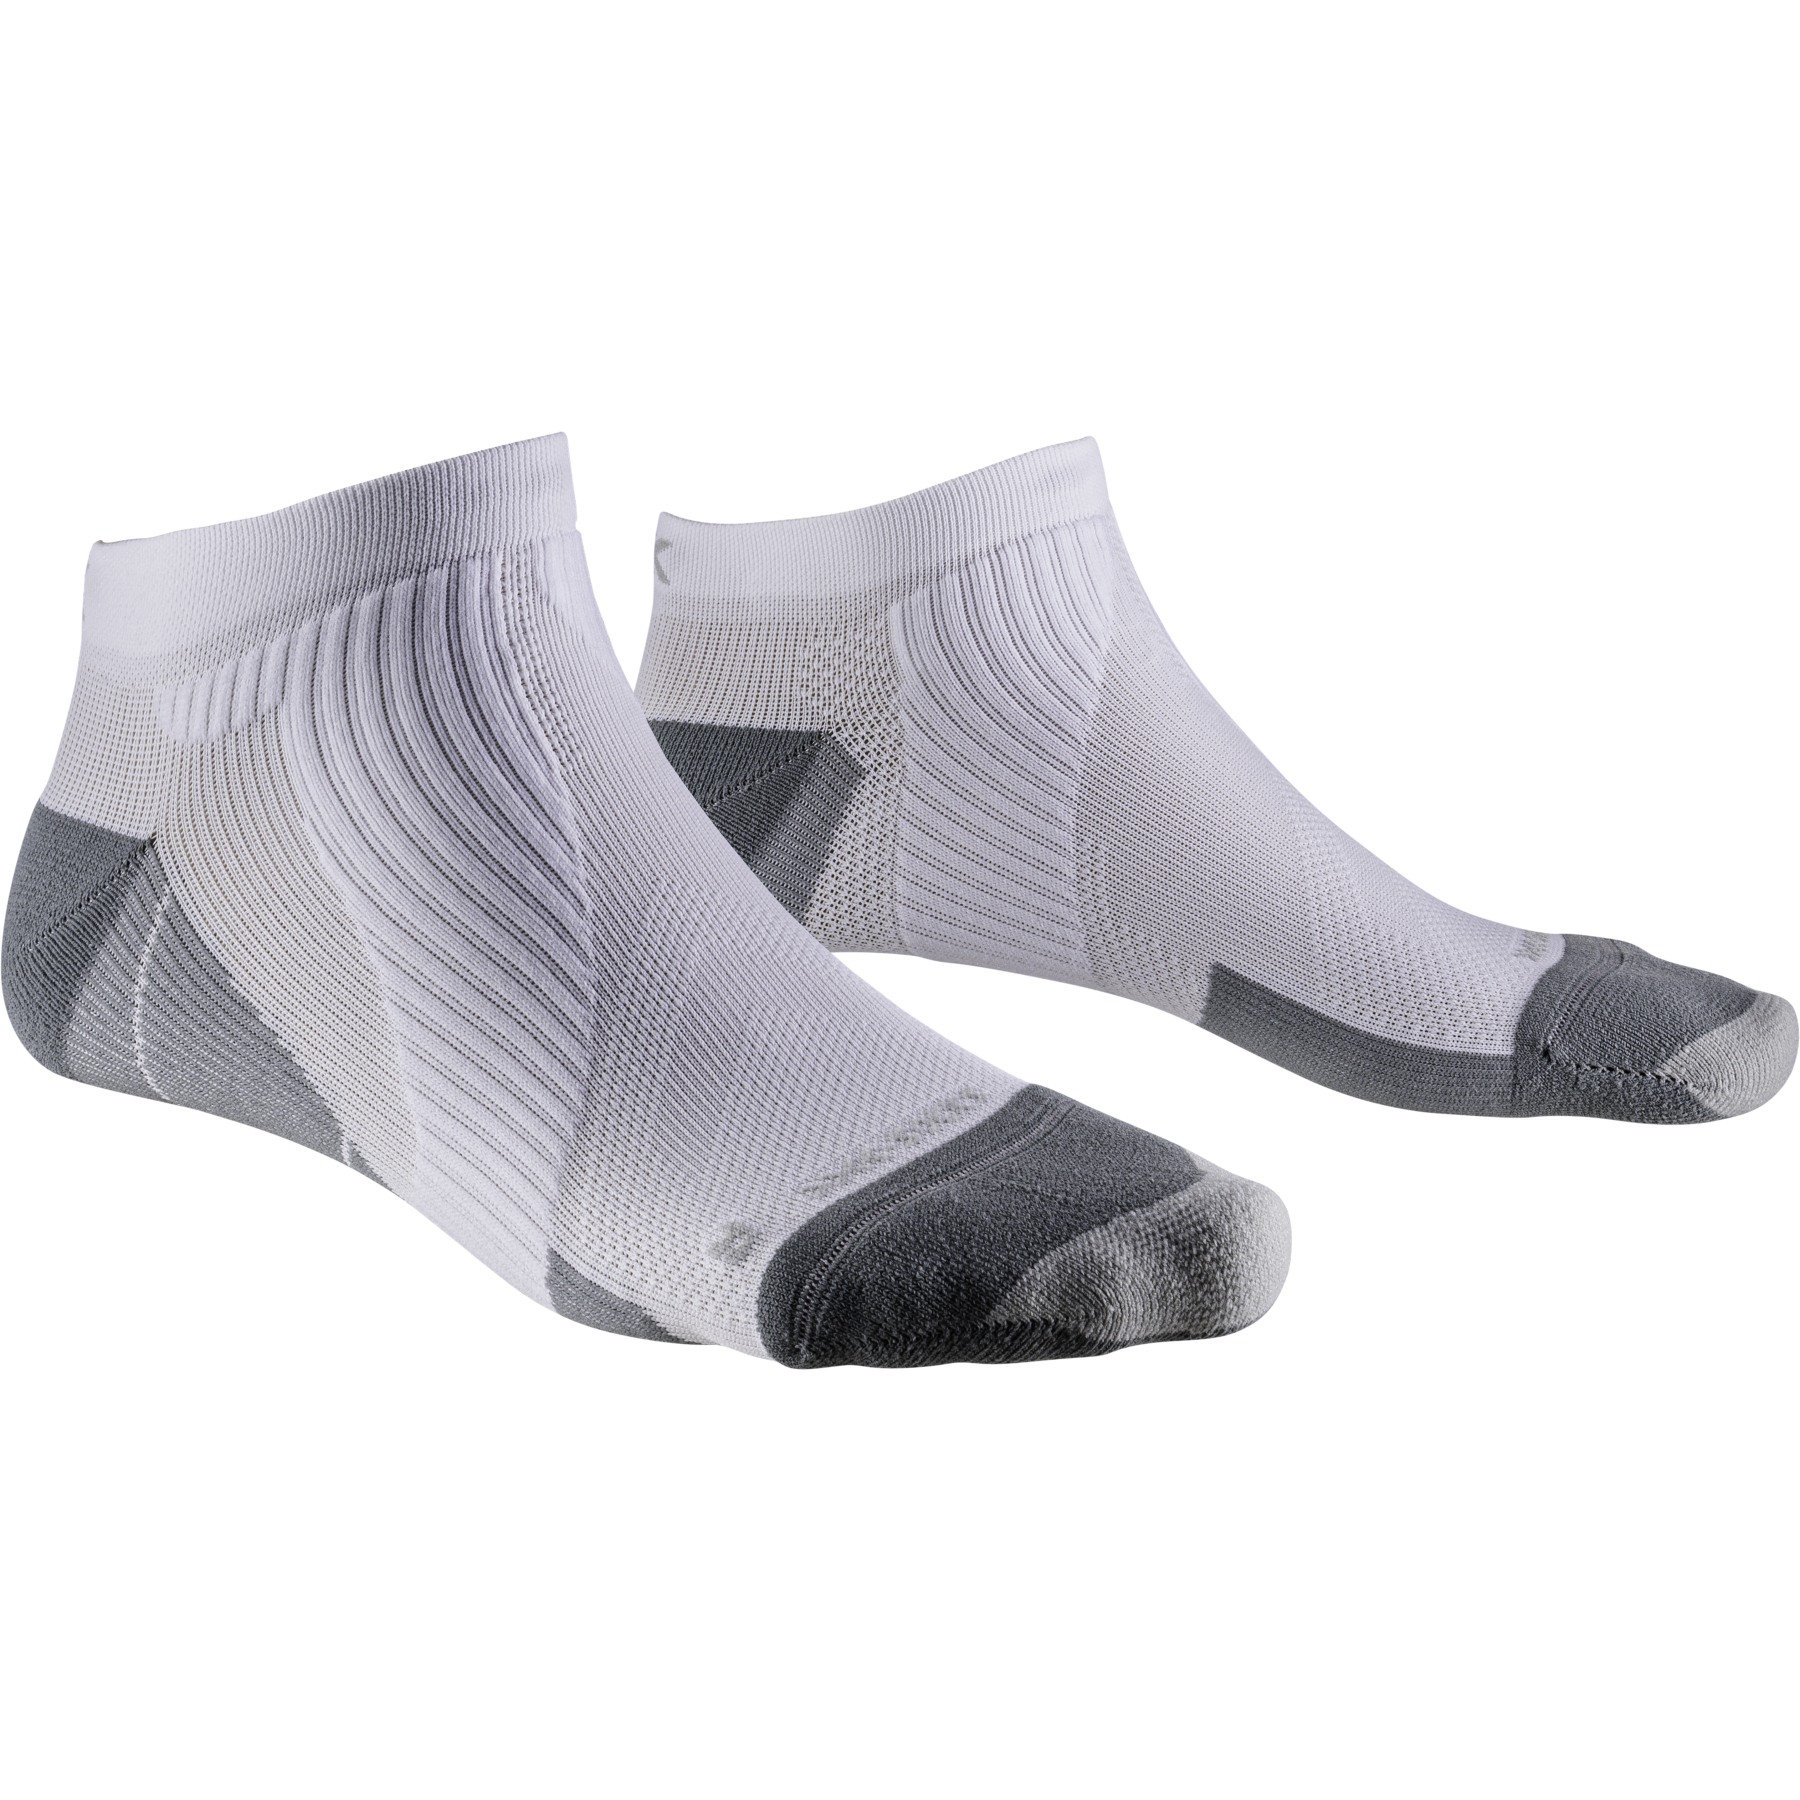 Picture of X-Socks Run Perform Low Cut Socks - arctic white/pearl grey